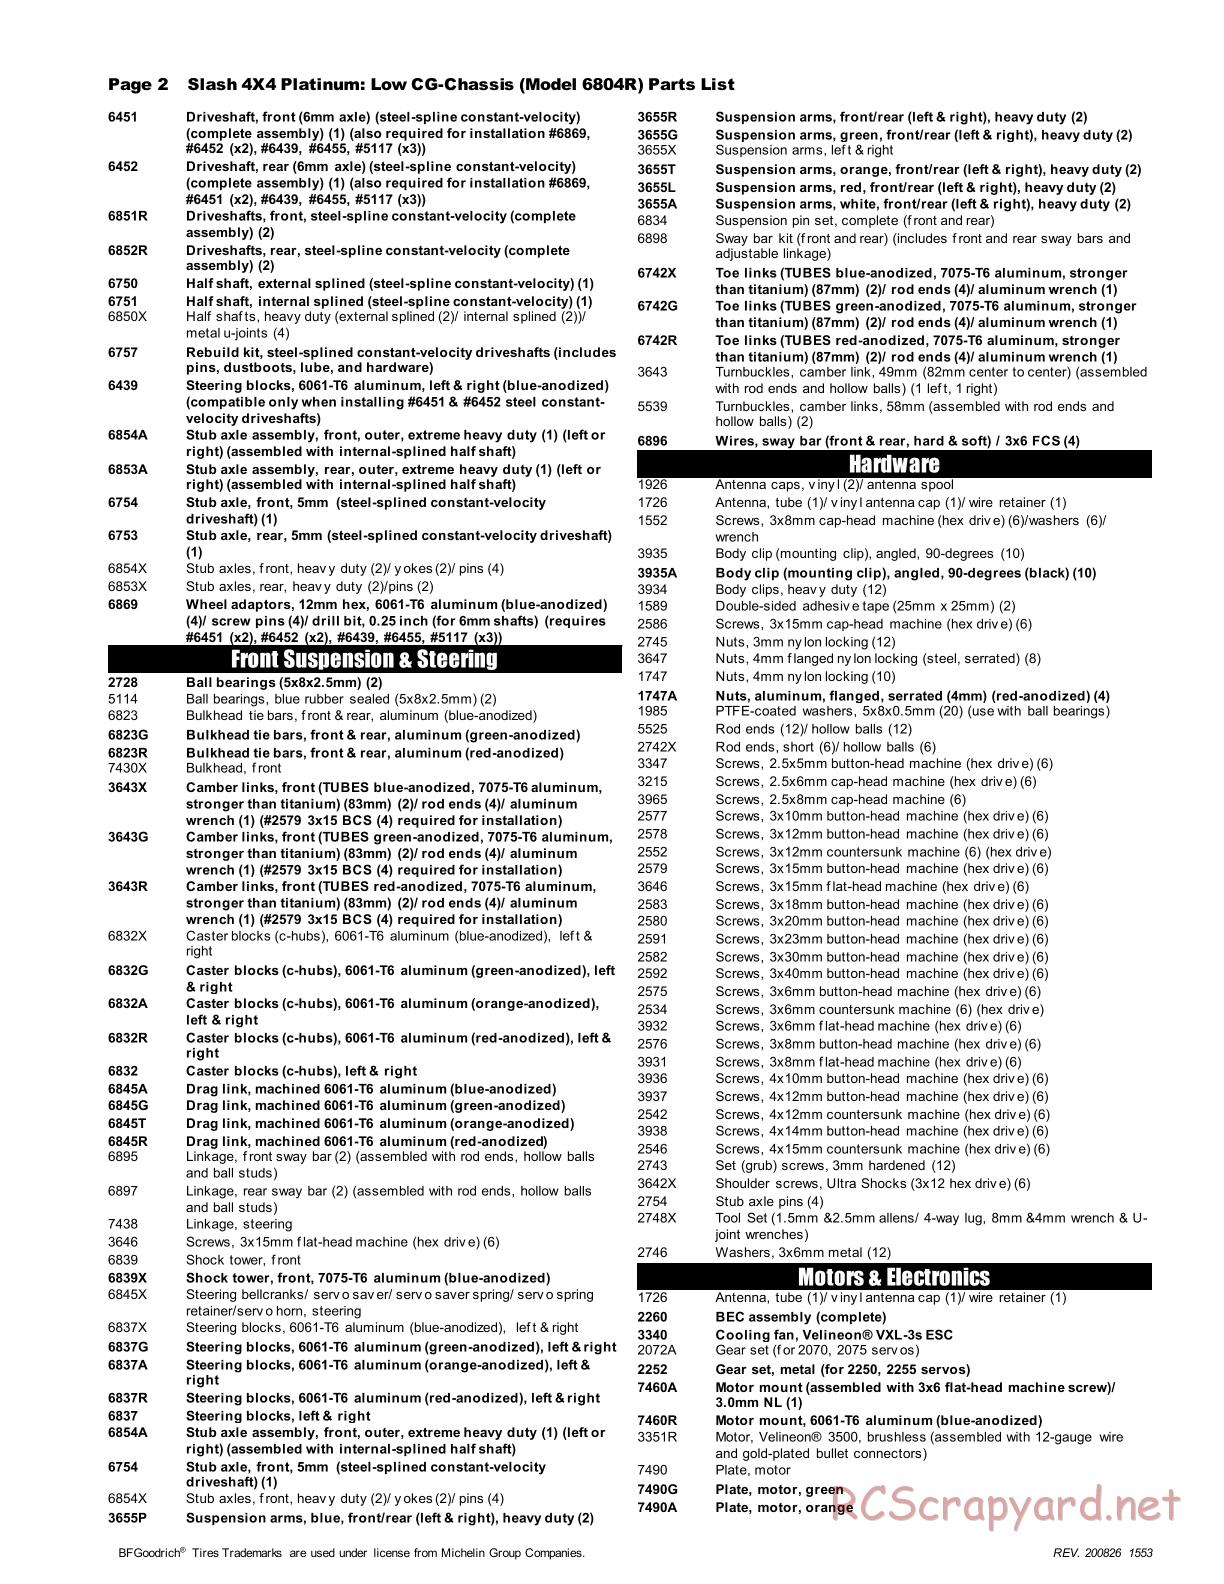 Traxxas - Slash 4x4 Platinum Ed (2012) - Parts List - Page 2